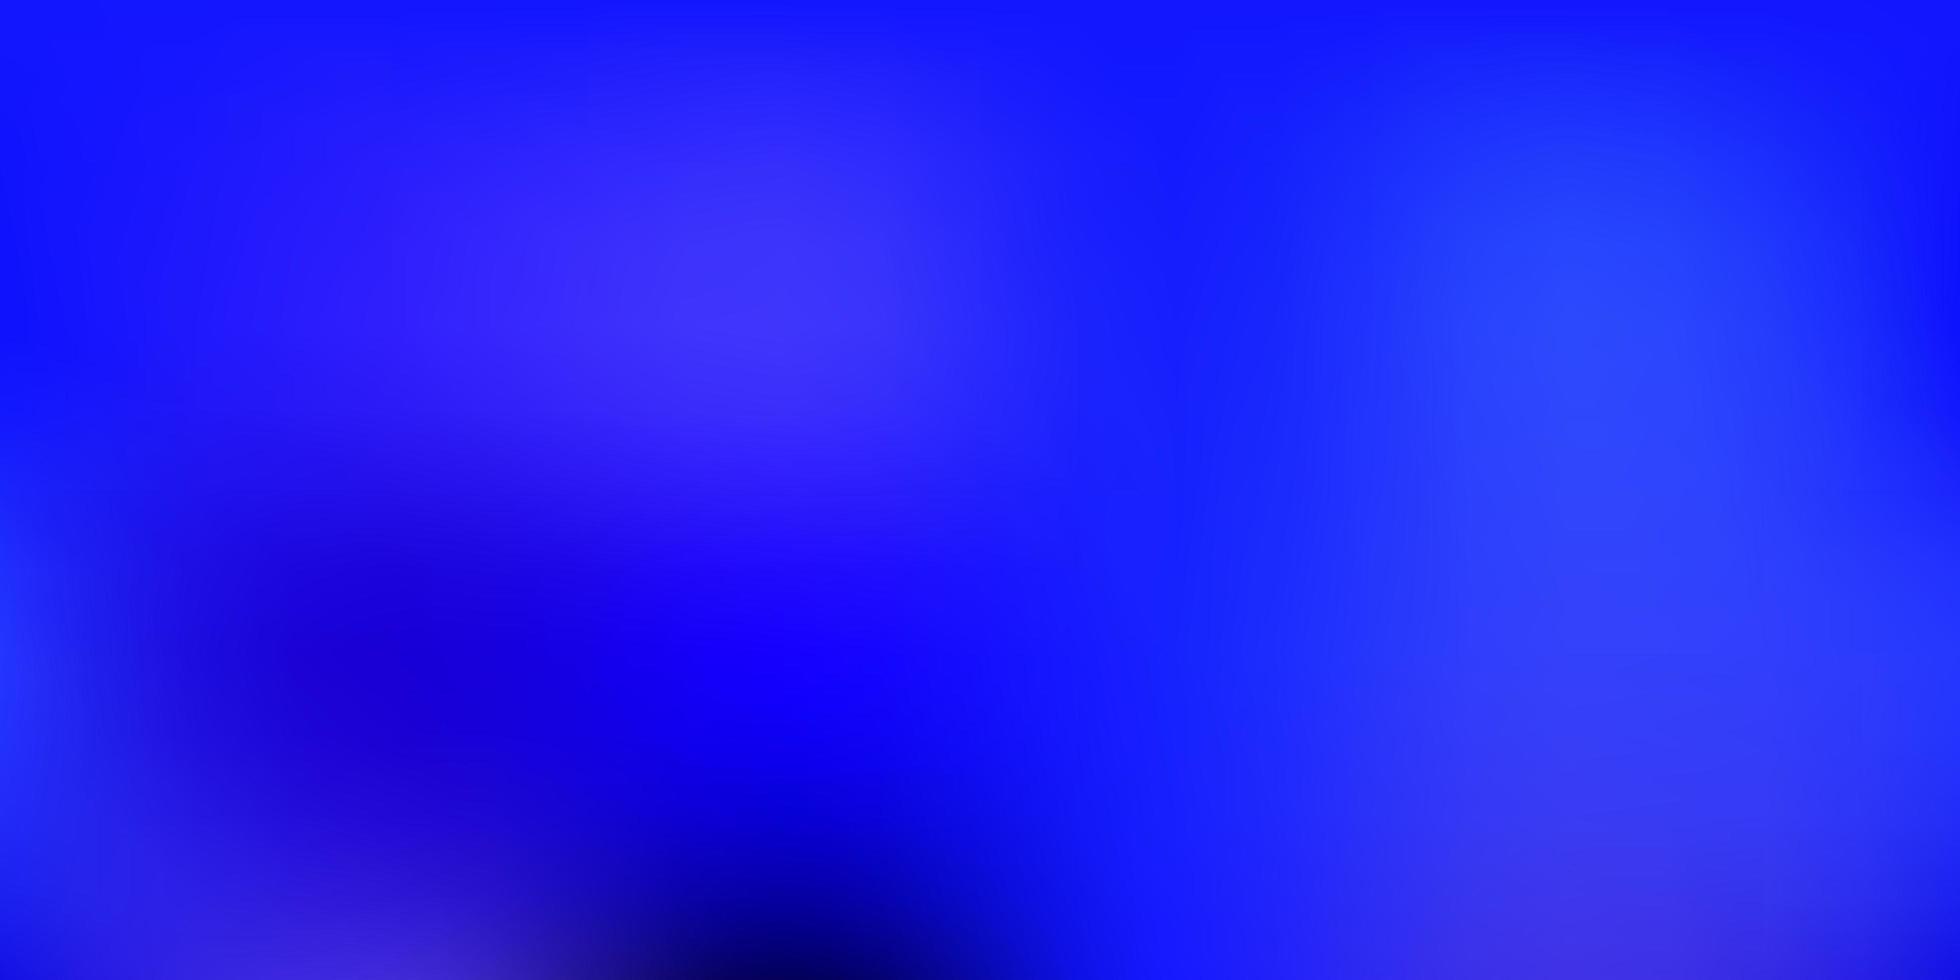 Light BLUE vector gradient blur drawing.